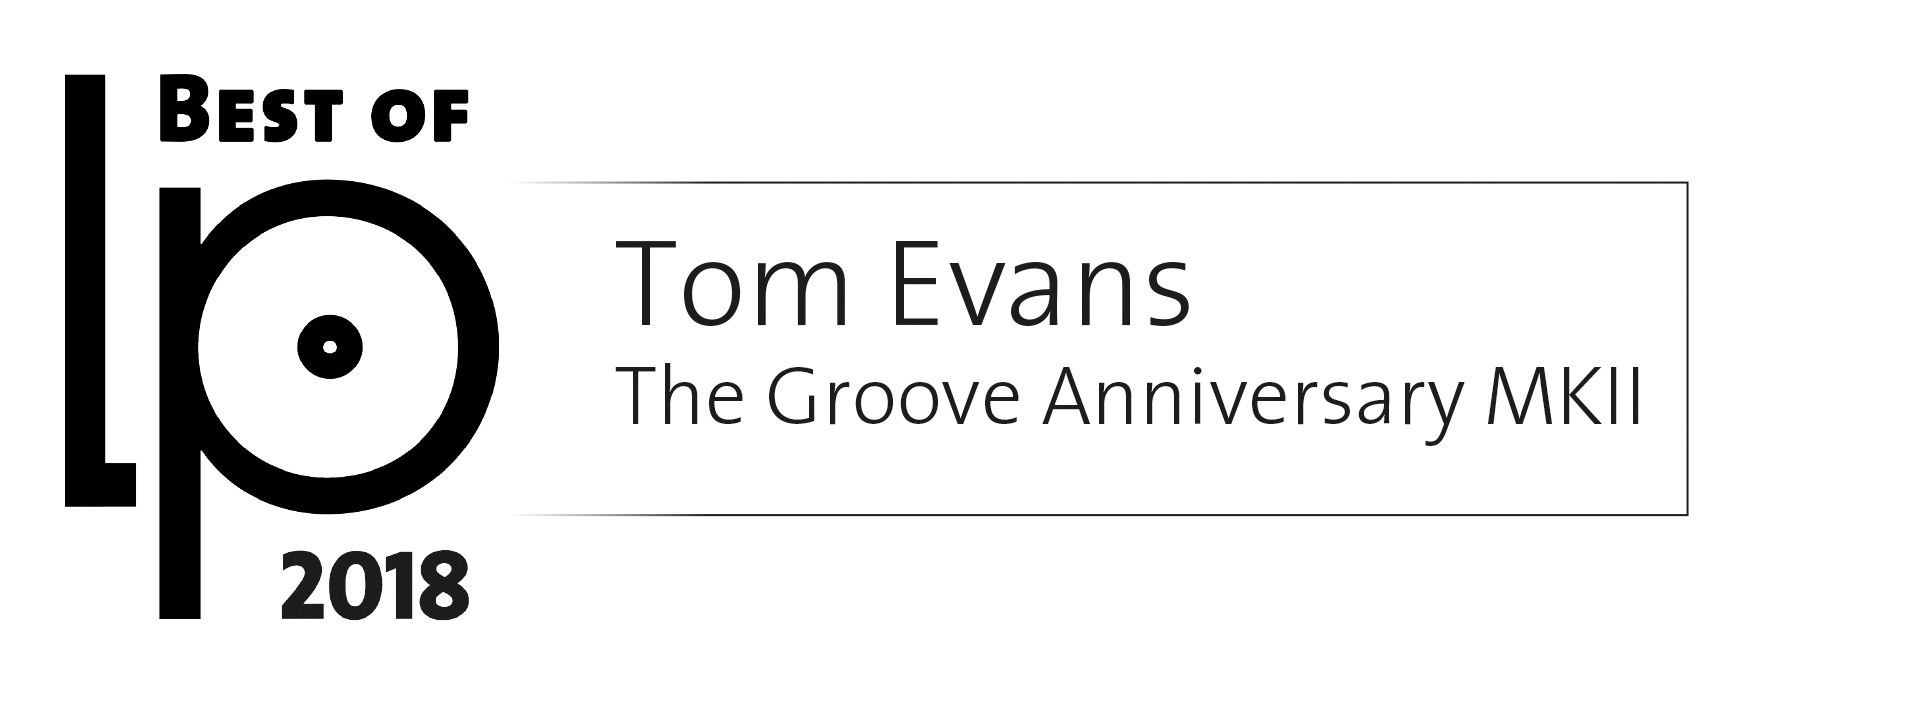 BEST OF LP 2018, TOM EVANS THE GROOVE ANNIVERSARY MK 2 BEST OF LP 2018, TOM EVANS THE GROOVE ANNIVERSARY 